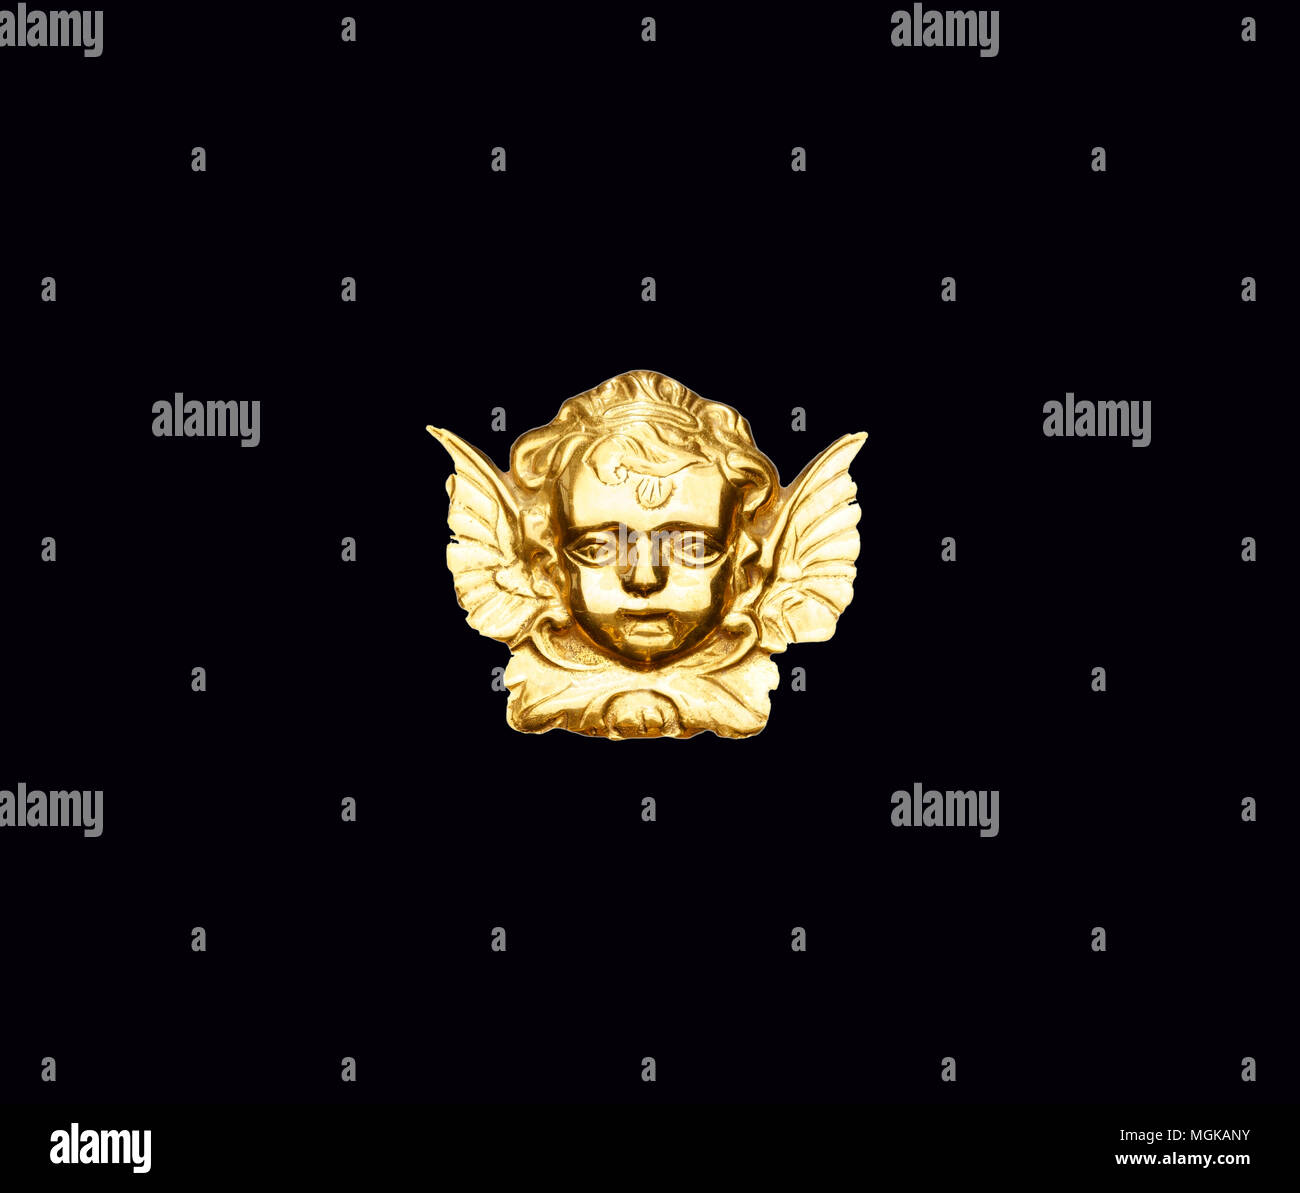 An angel. Metallic gold symbol on black background. Stock Photo